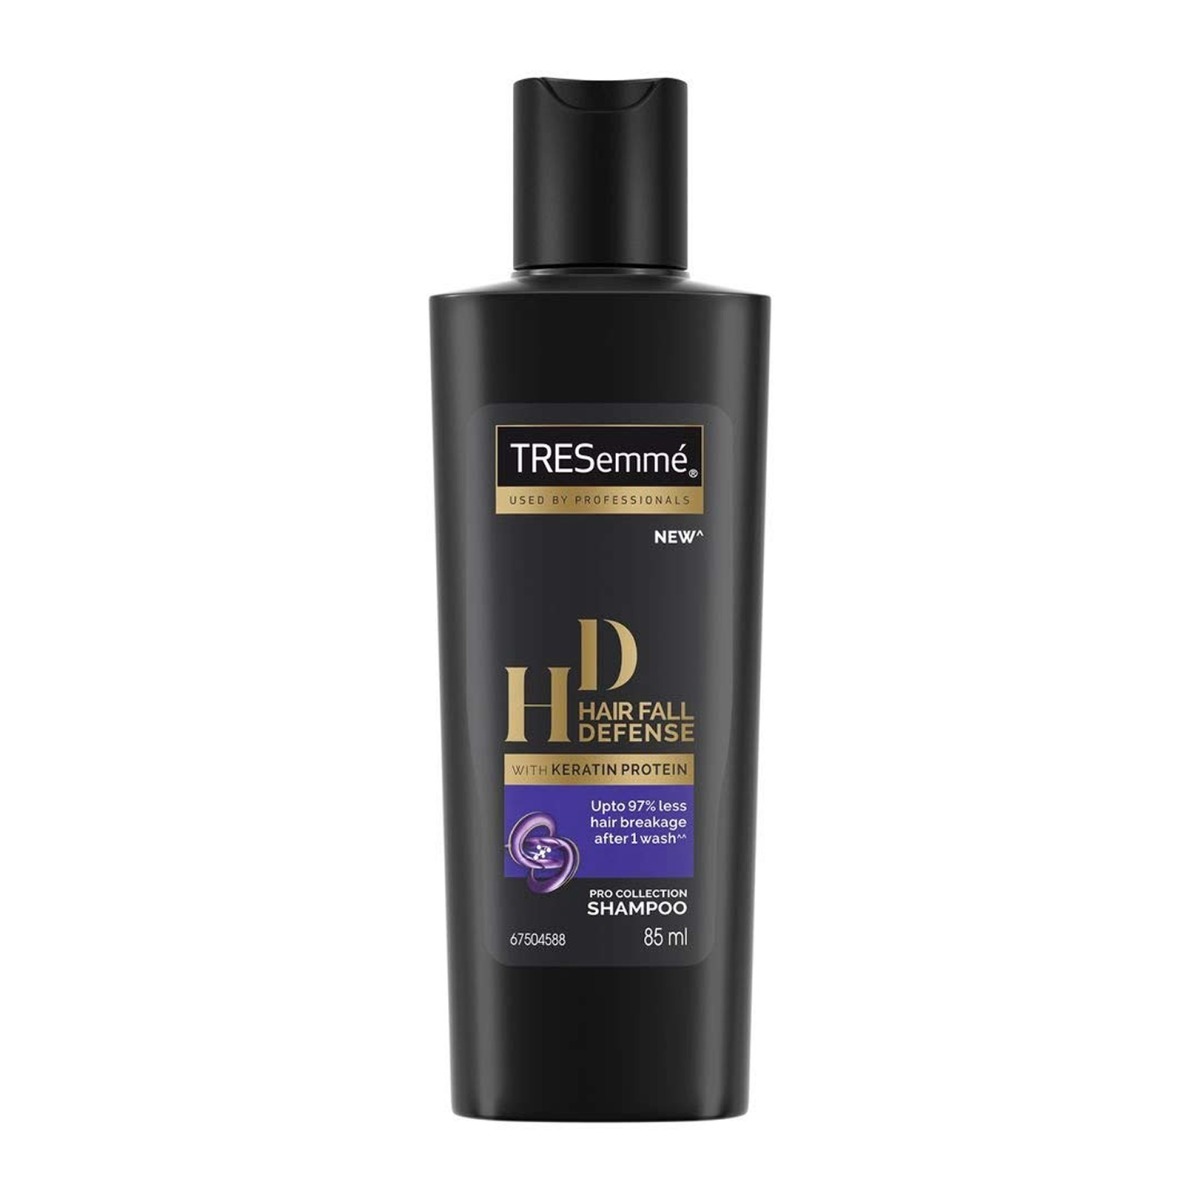 TRESemme Hairfall Defense Shampoo with Keratin Protein, 85ml